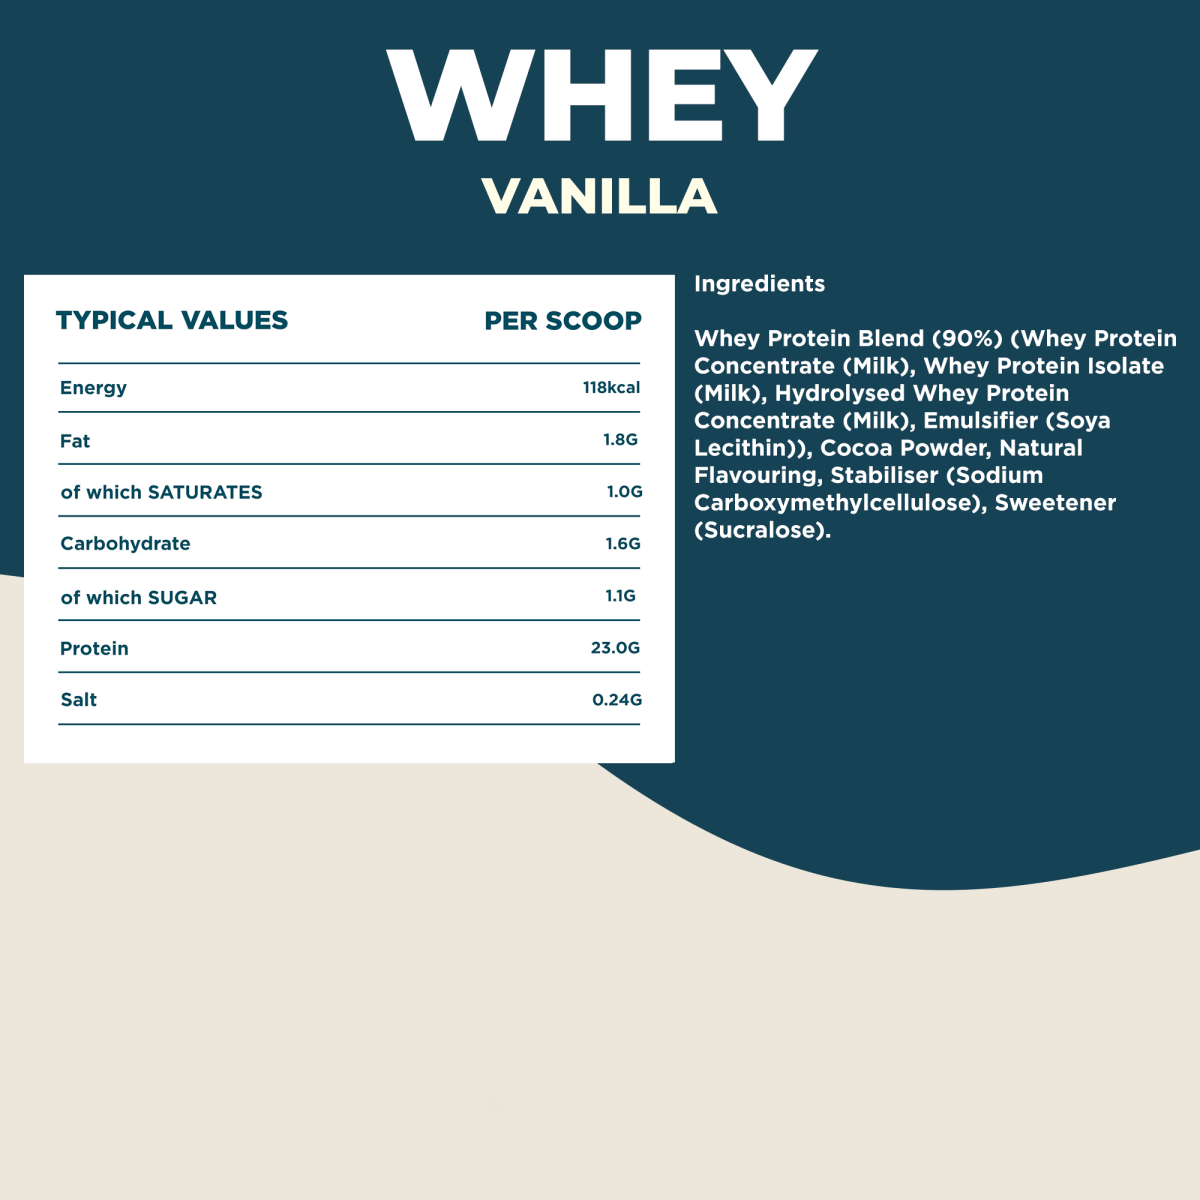 Whey Protein Vanilla 300g - #kinetica-sports#